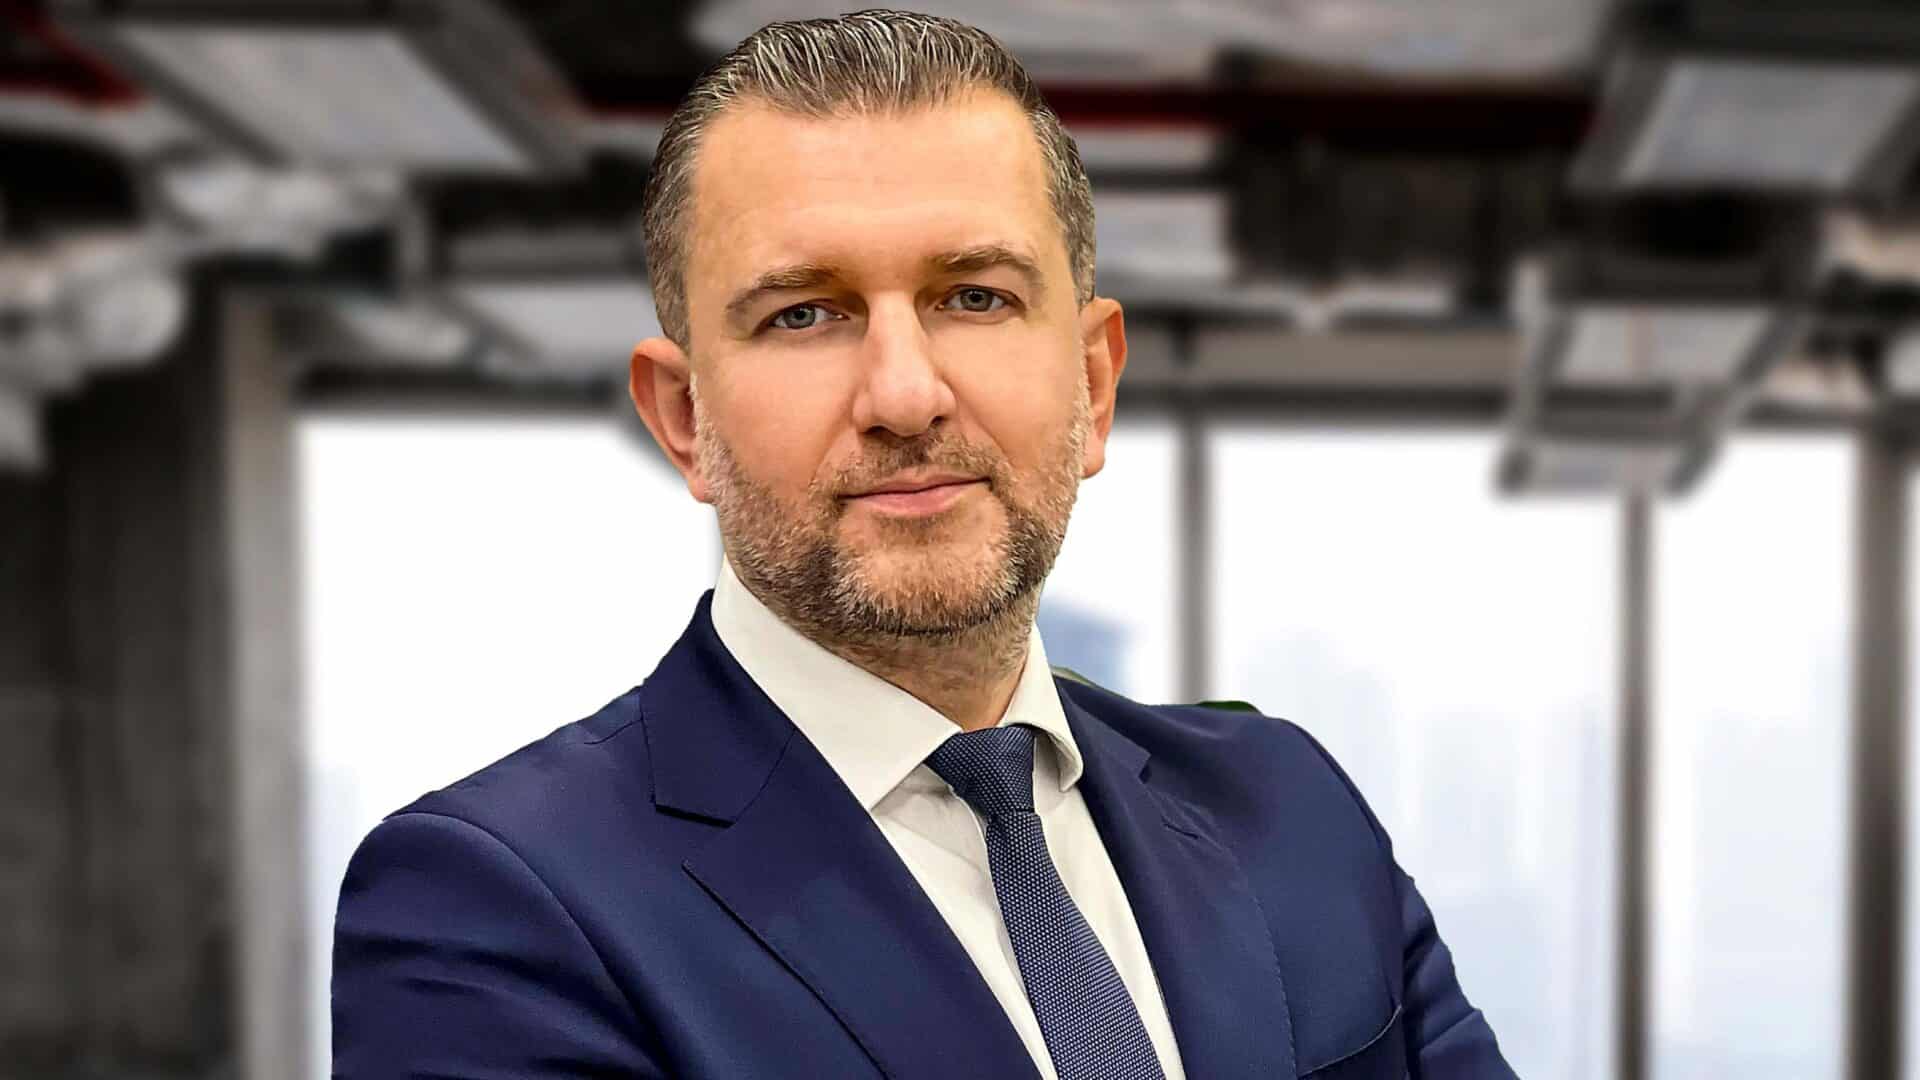 Marcin Purgal, Senior Director, Investment at Avison Young